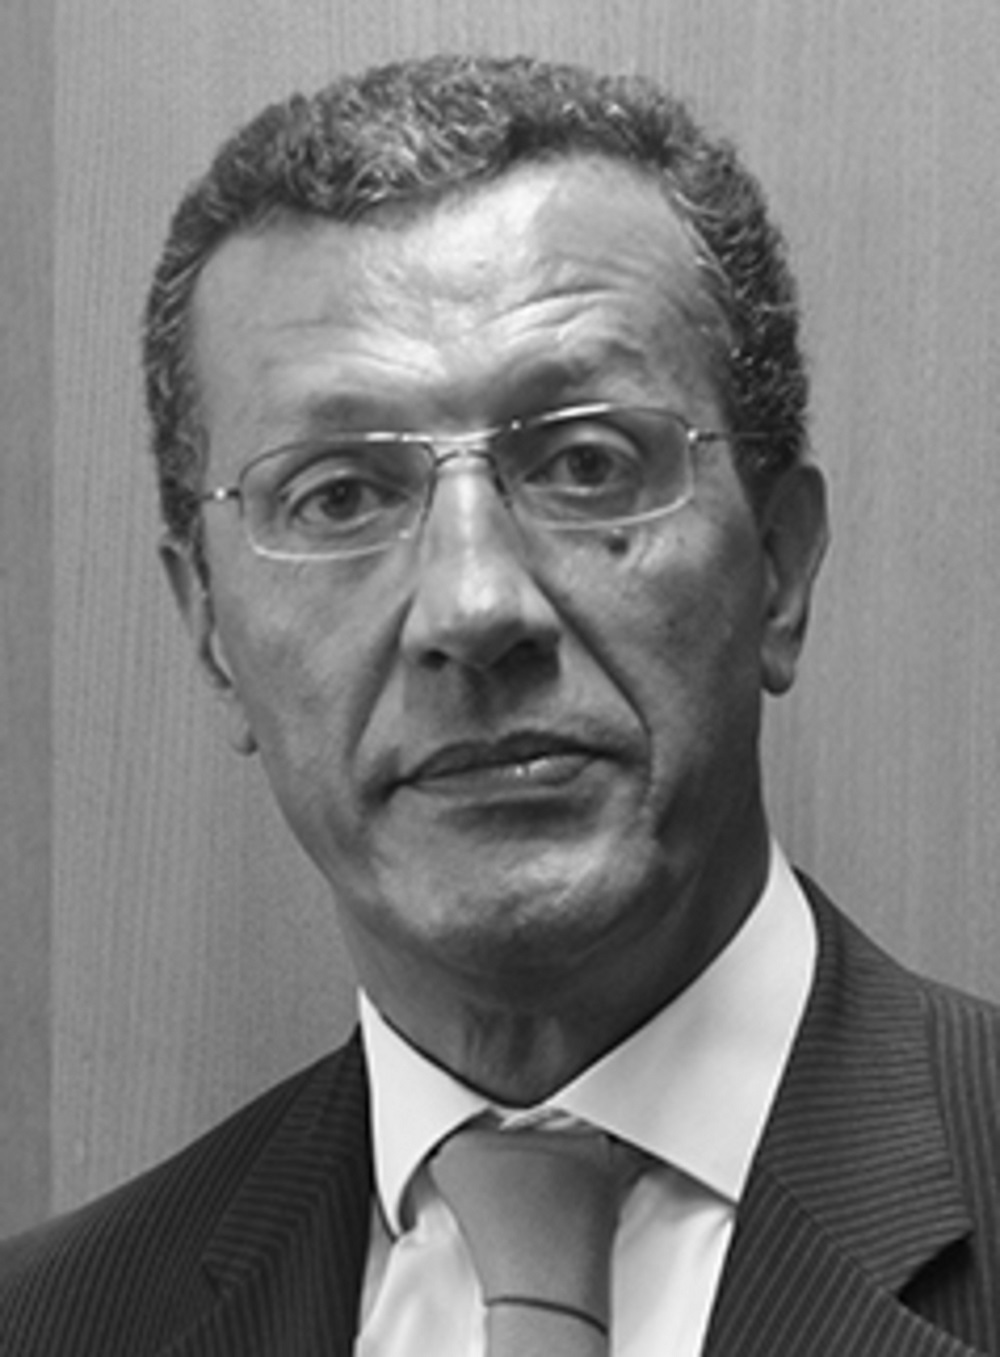 José Manuel Mesquita